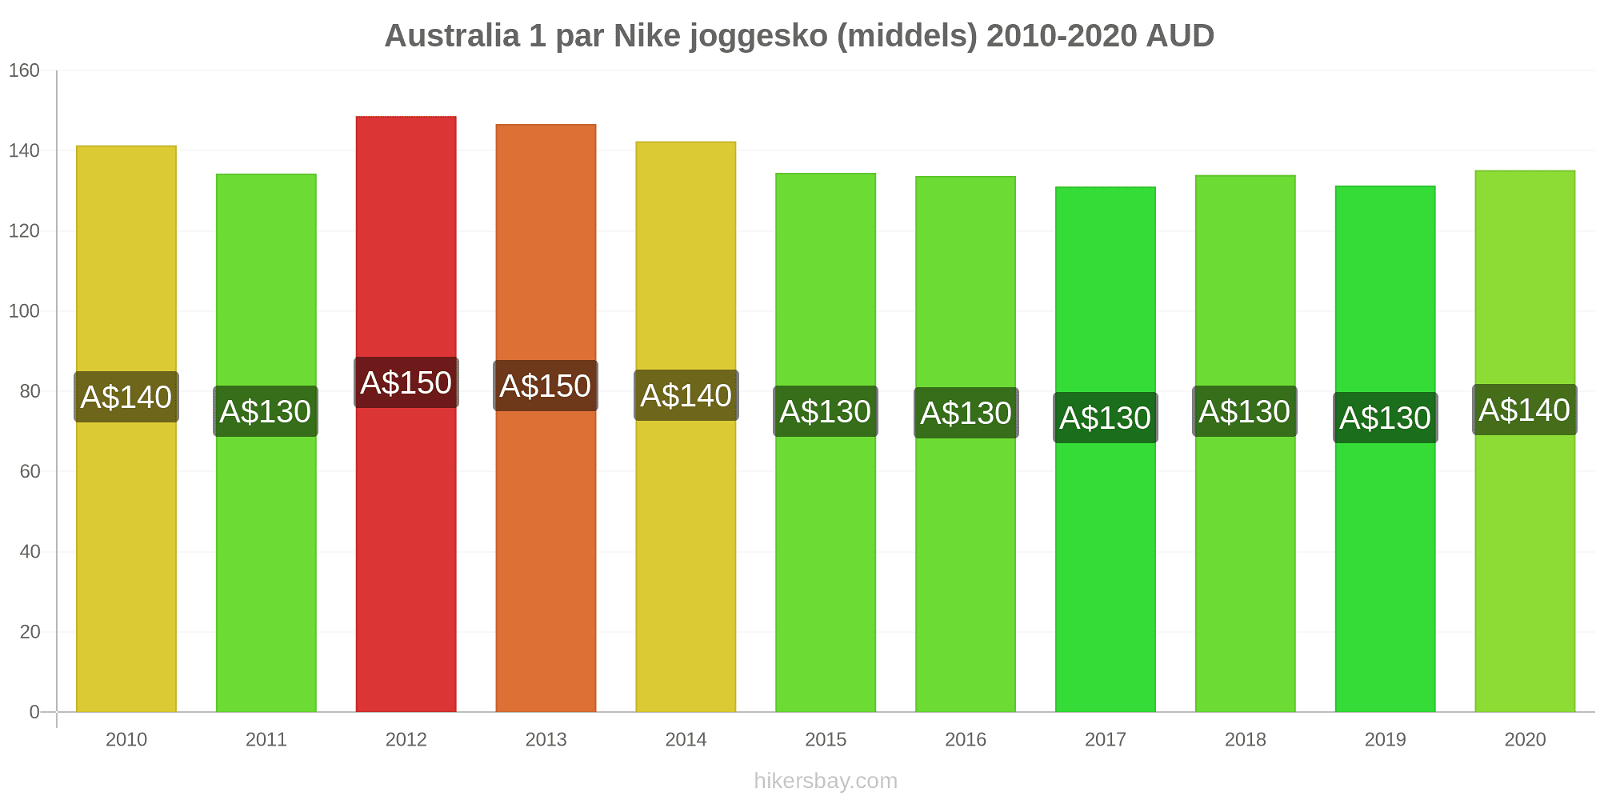 Australia prisendringer 1 par Nike joggesko (middels) hikersbay.com